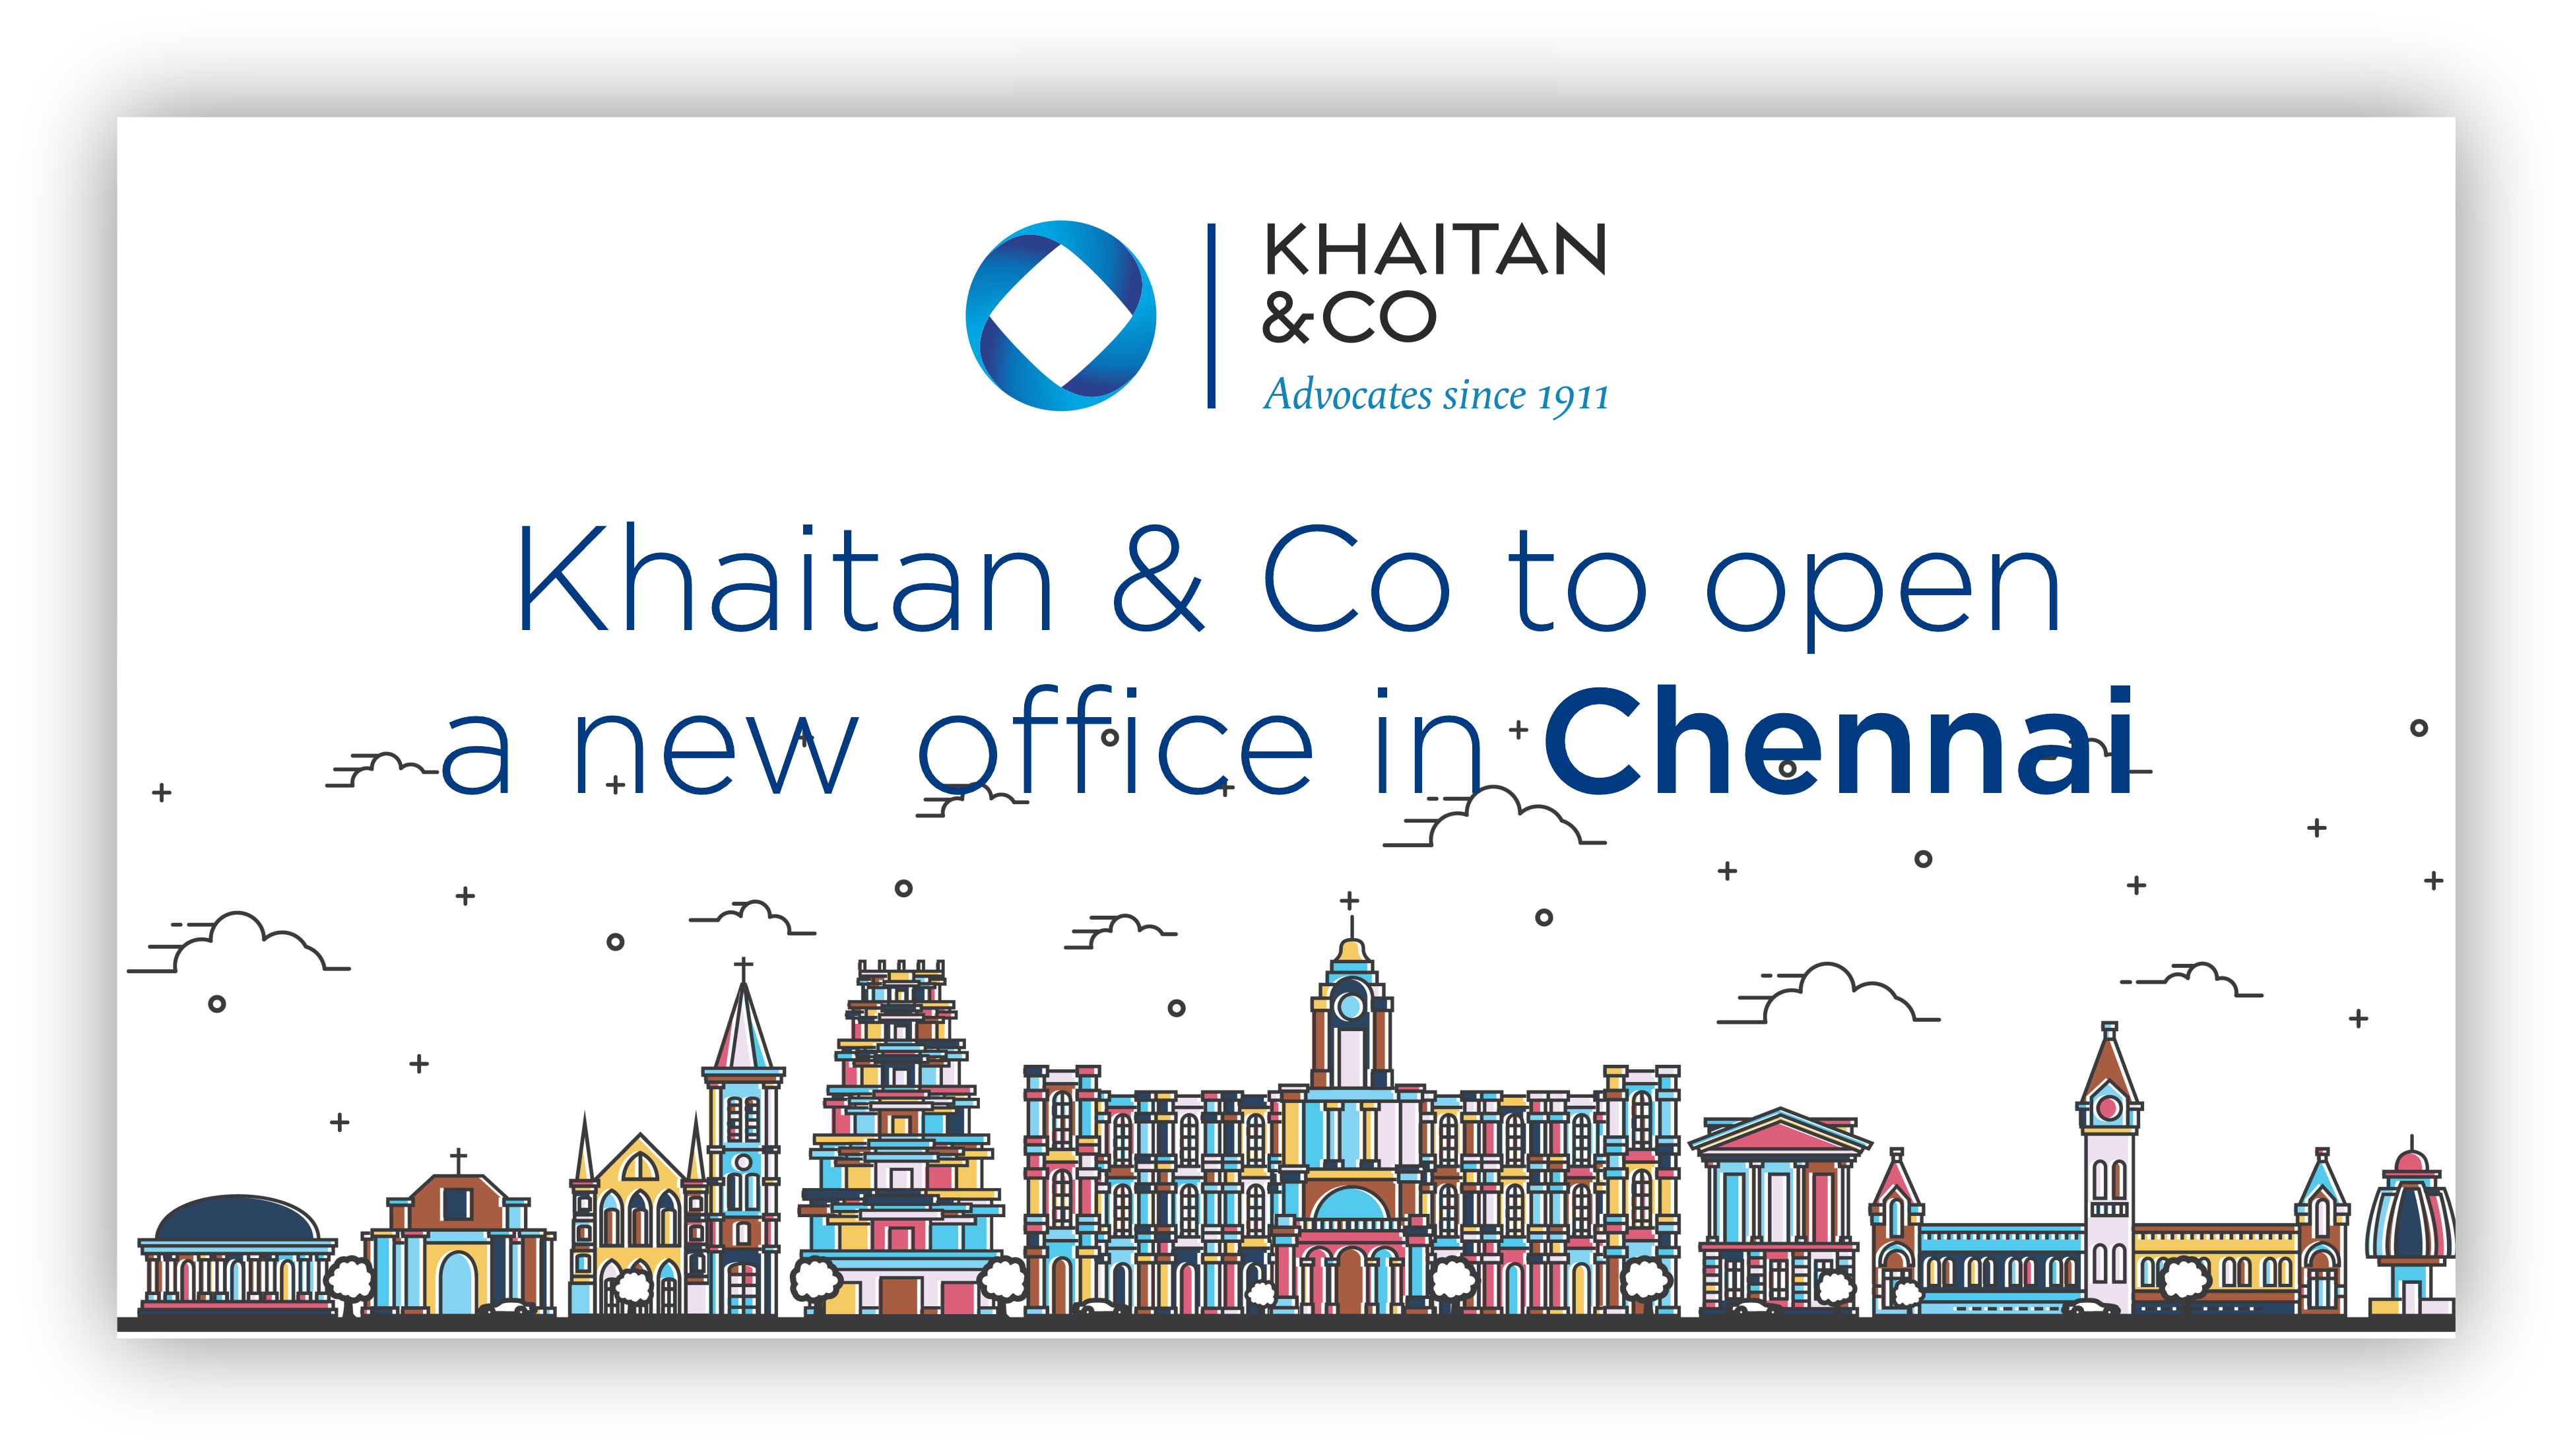 Khaitan & Co to open a new office in Chennai